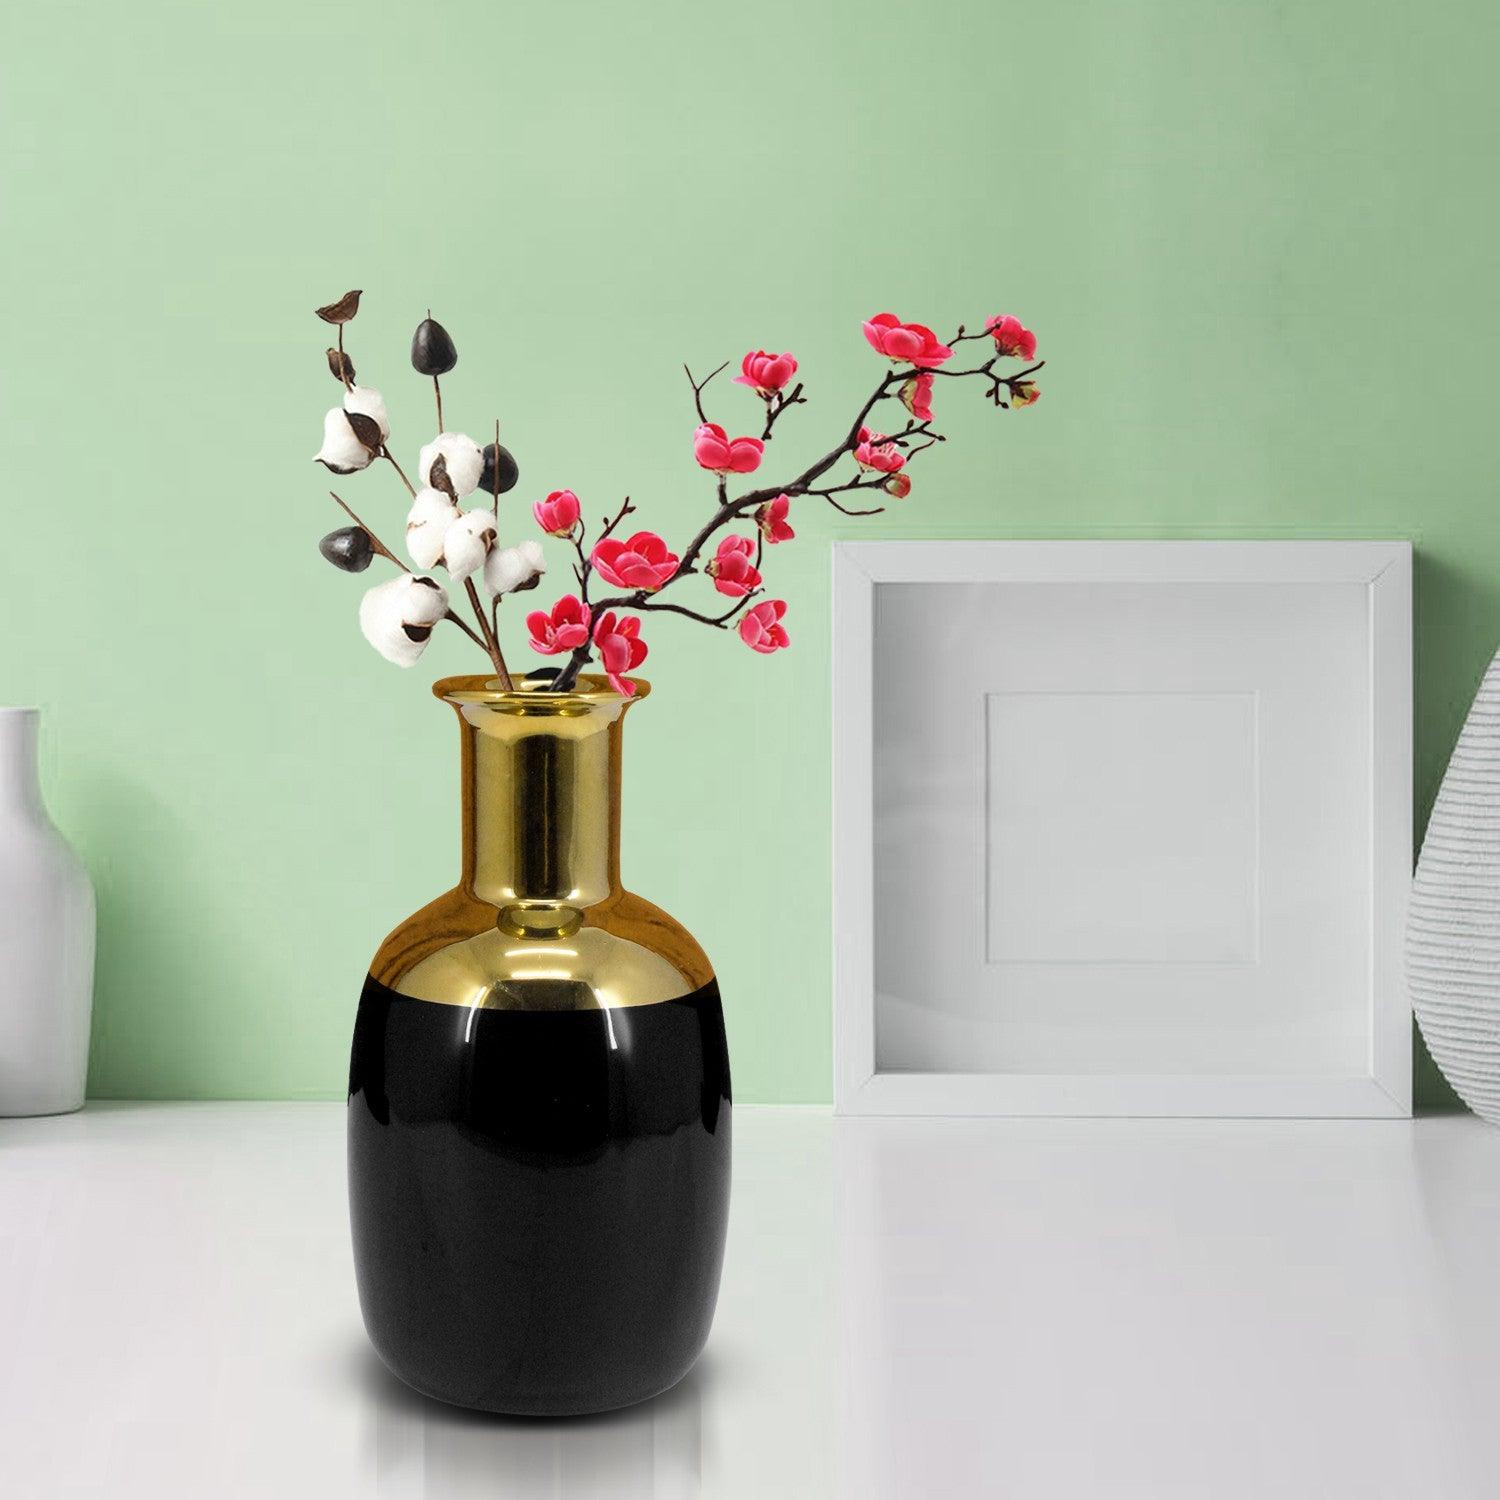 Market99 Vase, Flower Vase, Unique Glazed Design, Decorative Vase, Black, Ceramic - MARKET 99